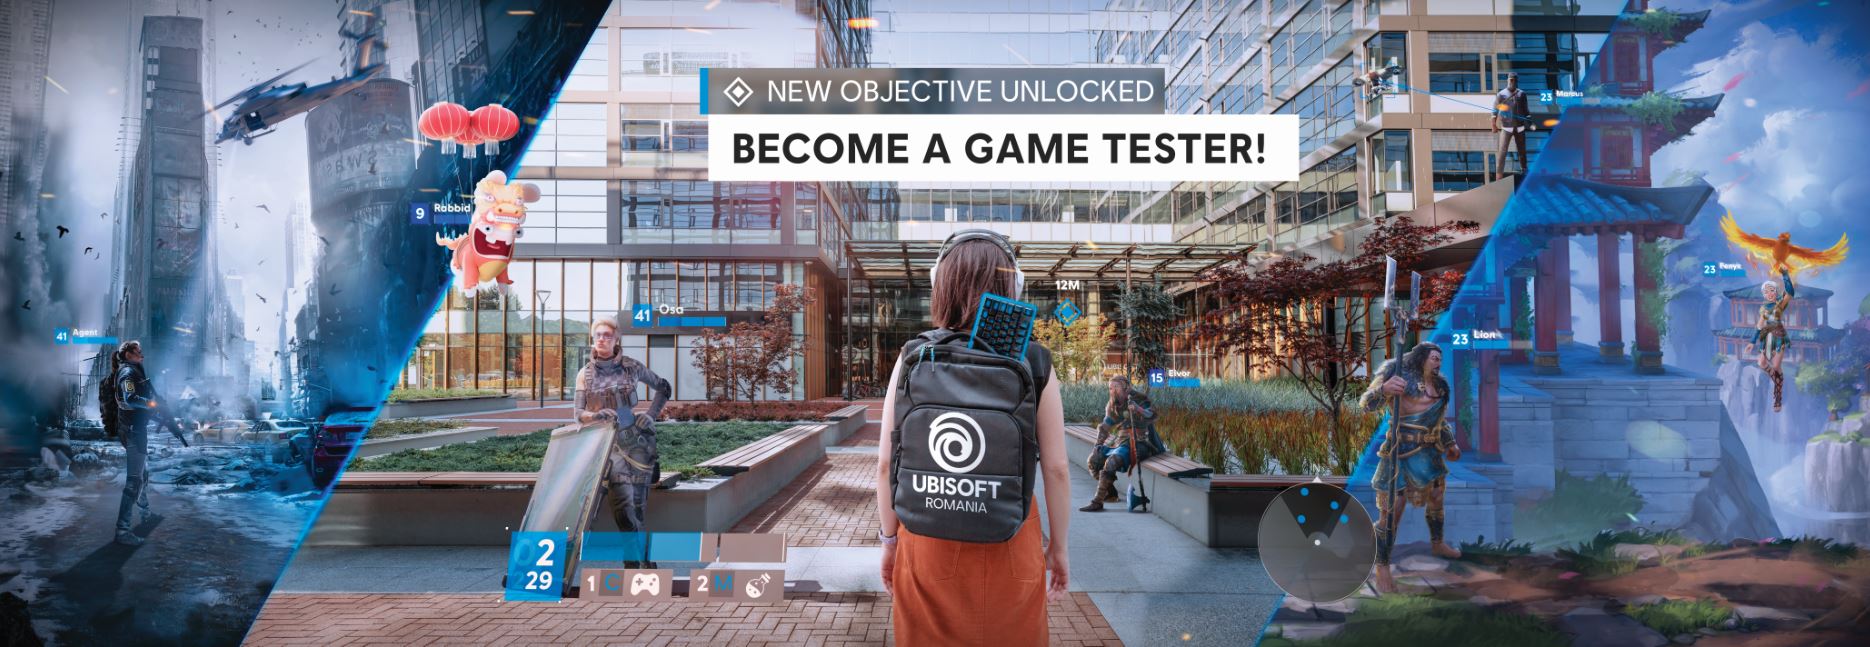 Ubisoft Romania x Comic Con - Become a game tester